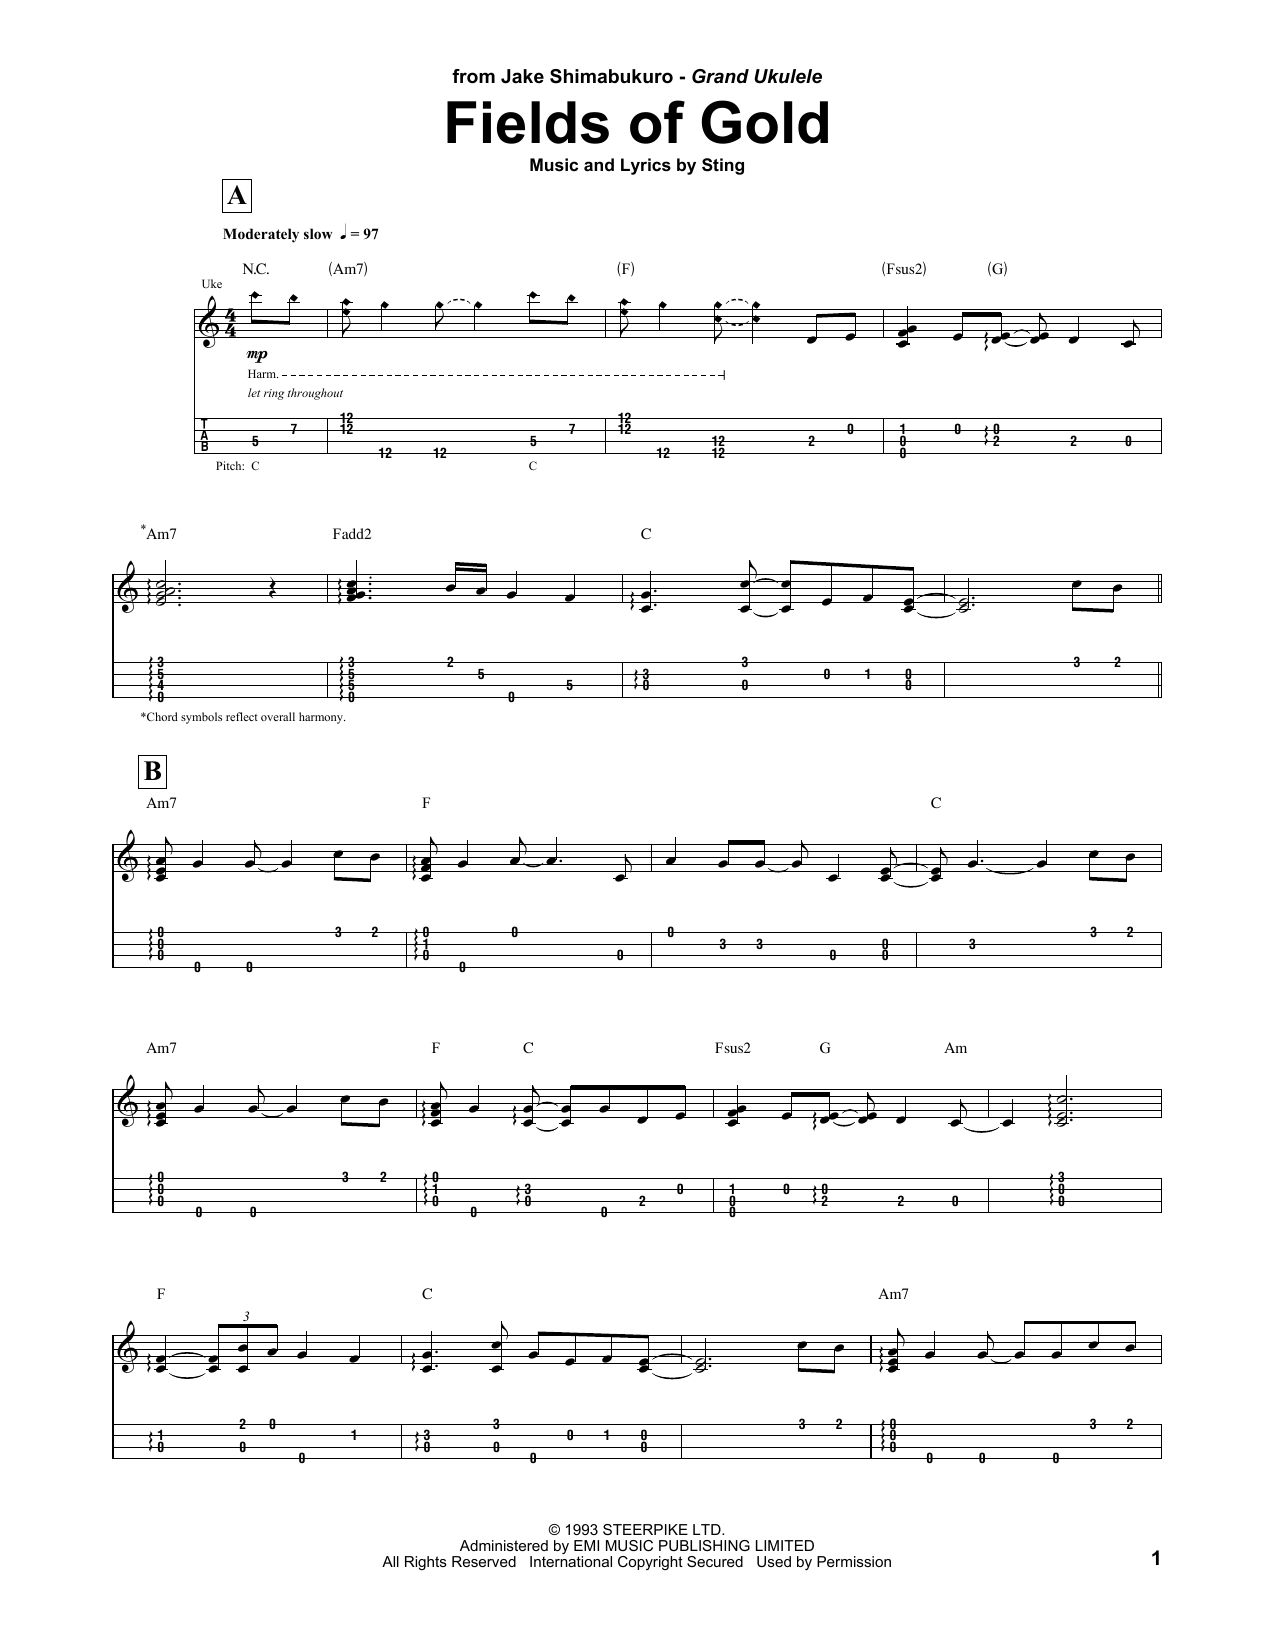 Download Jake Shimabukuro Fields Of Gold Sheet Music and learn how to play UKETAB PDF digital score in minutes